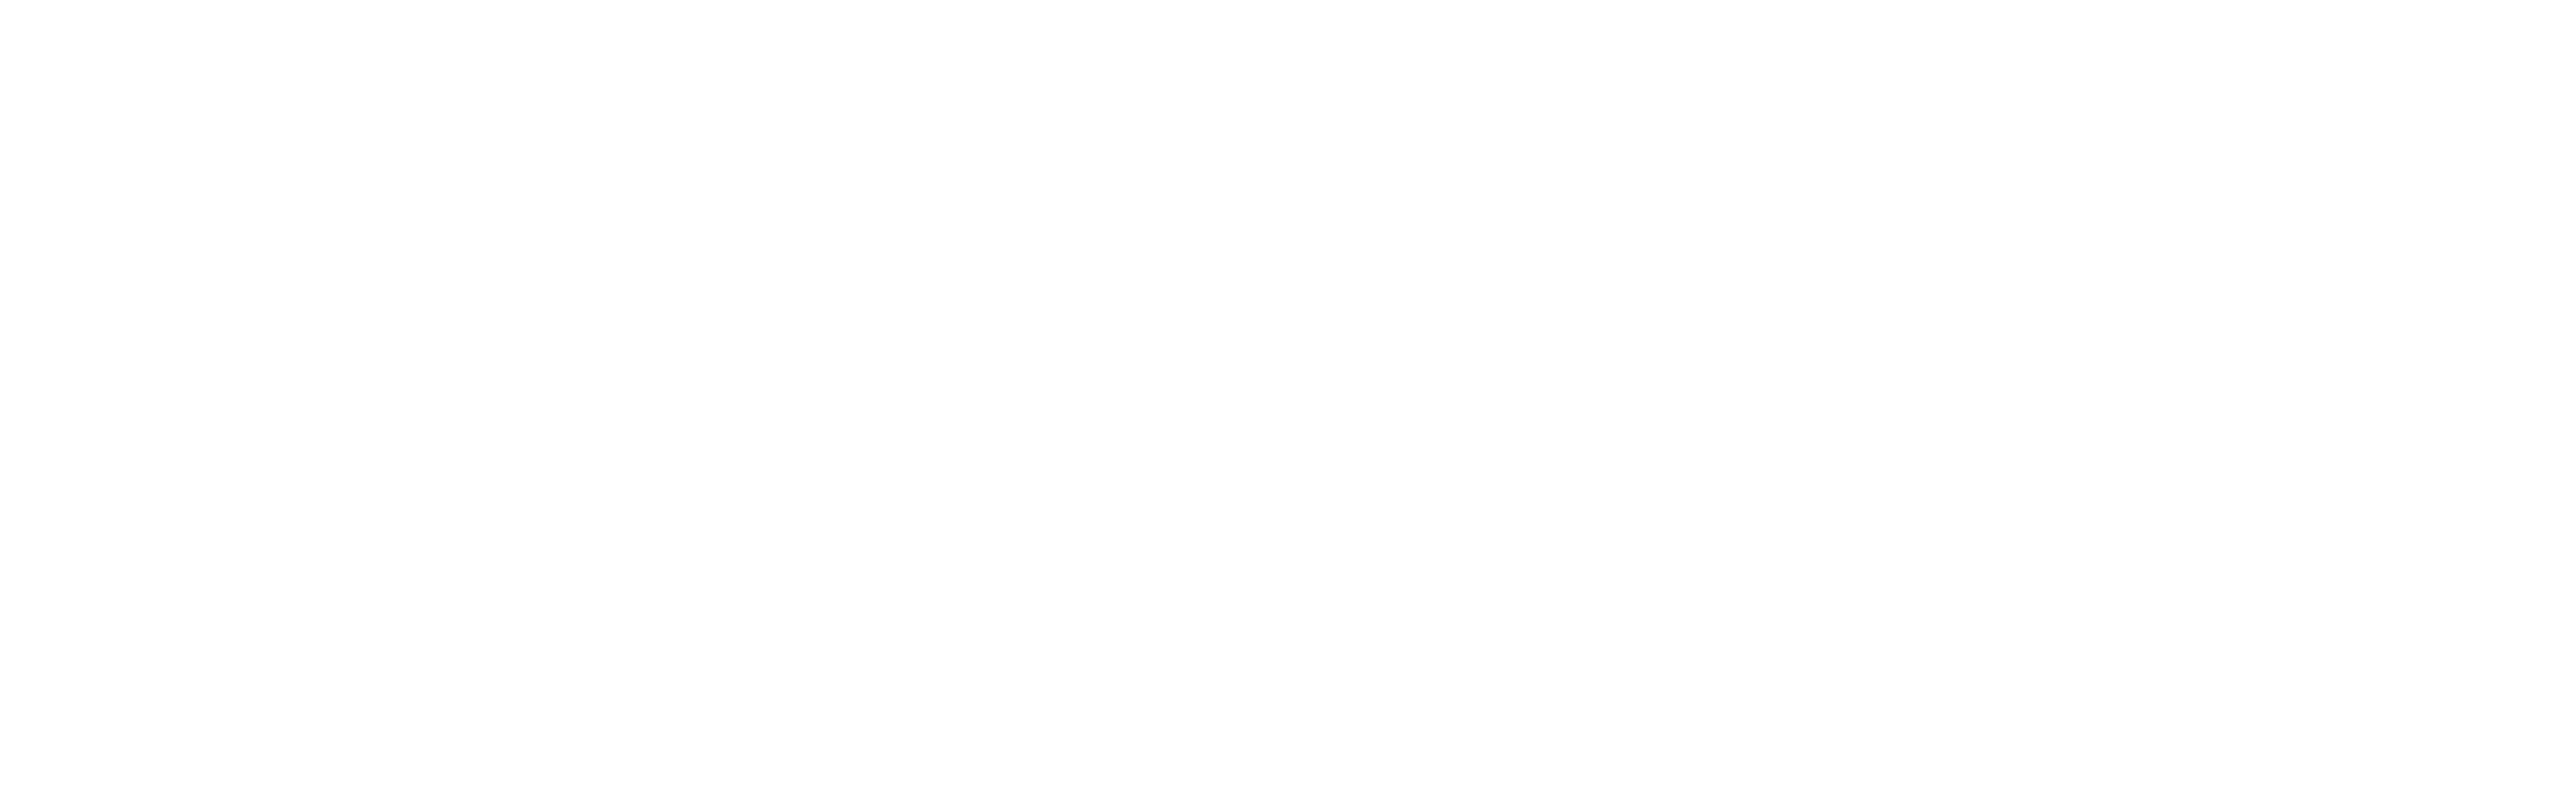 https://www.heyday.de/wp-content/uploads/2021/08/Heyday_footer_final.png